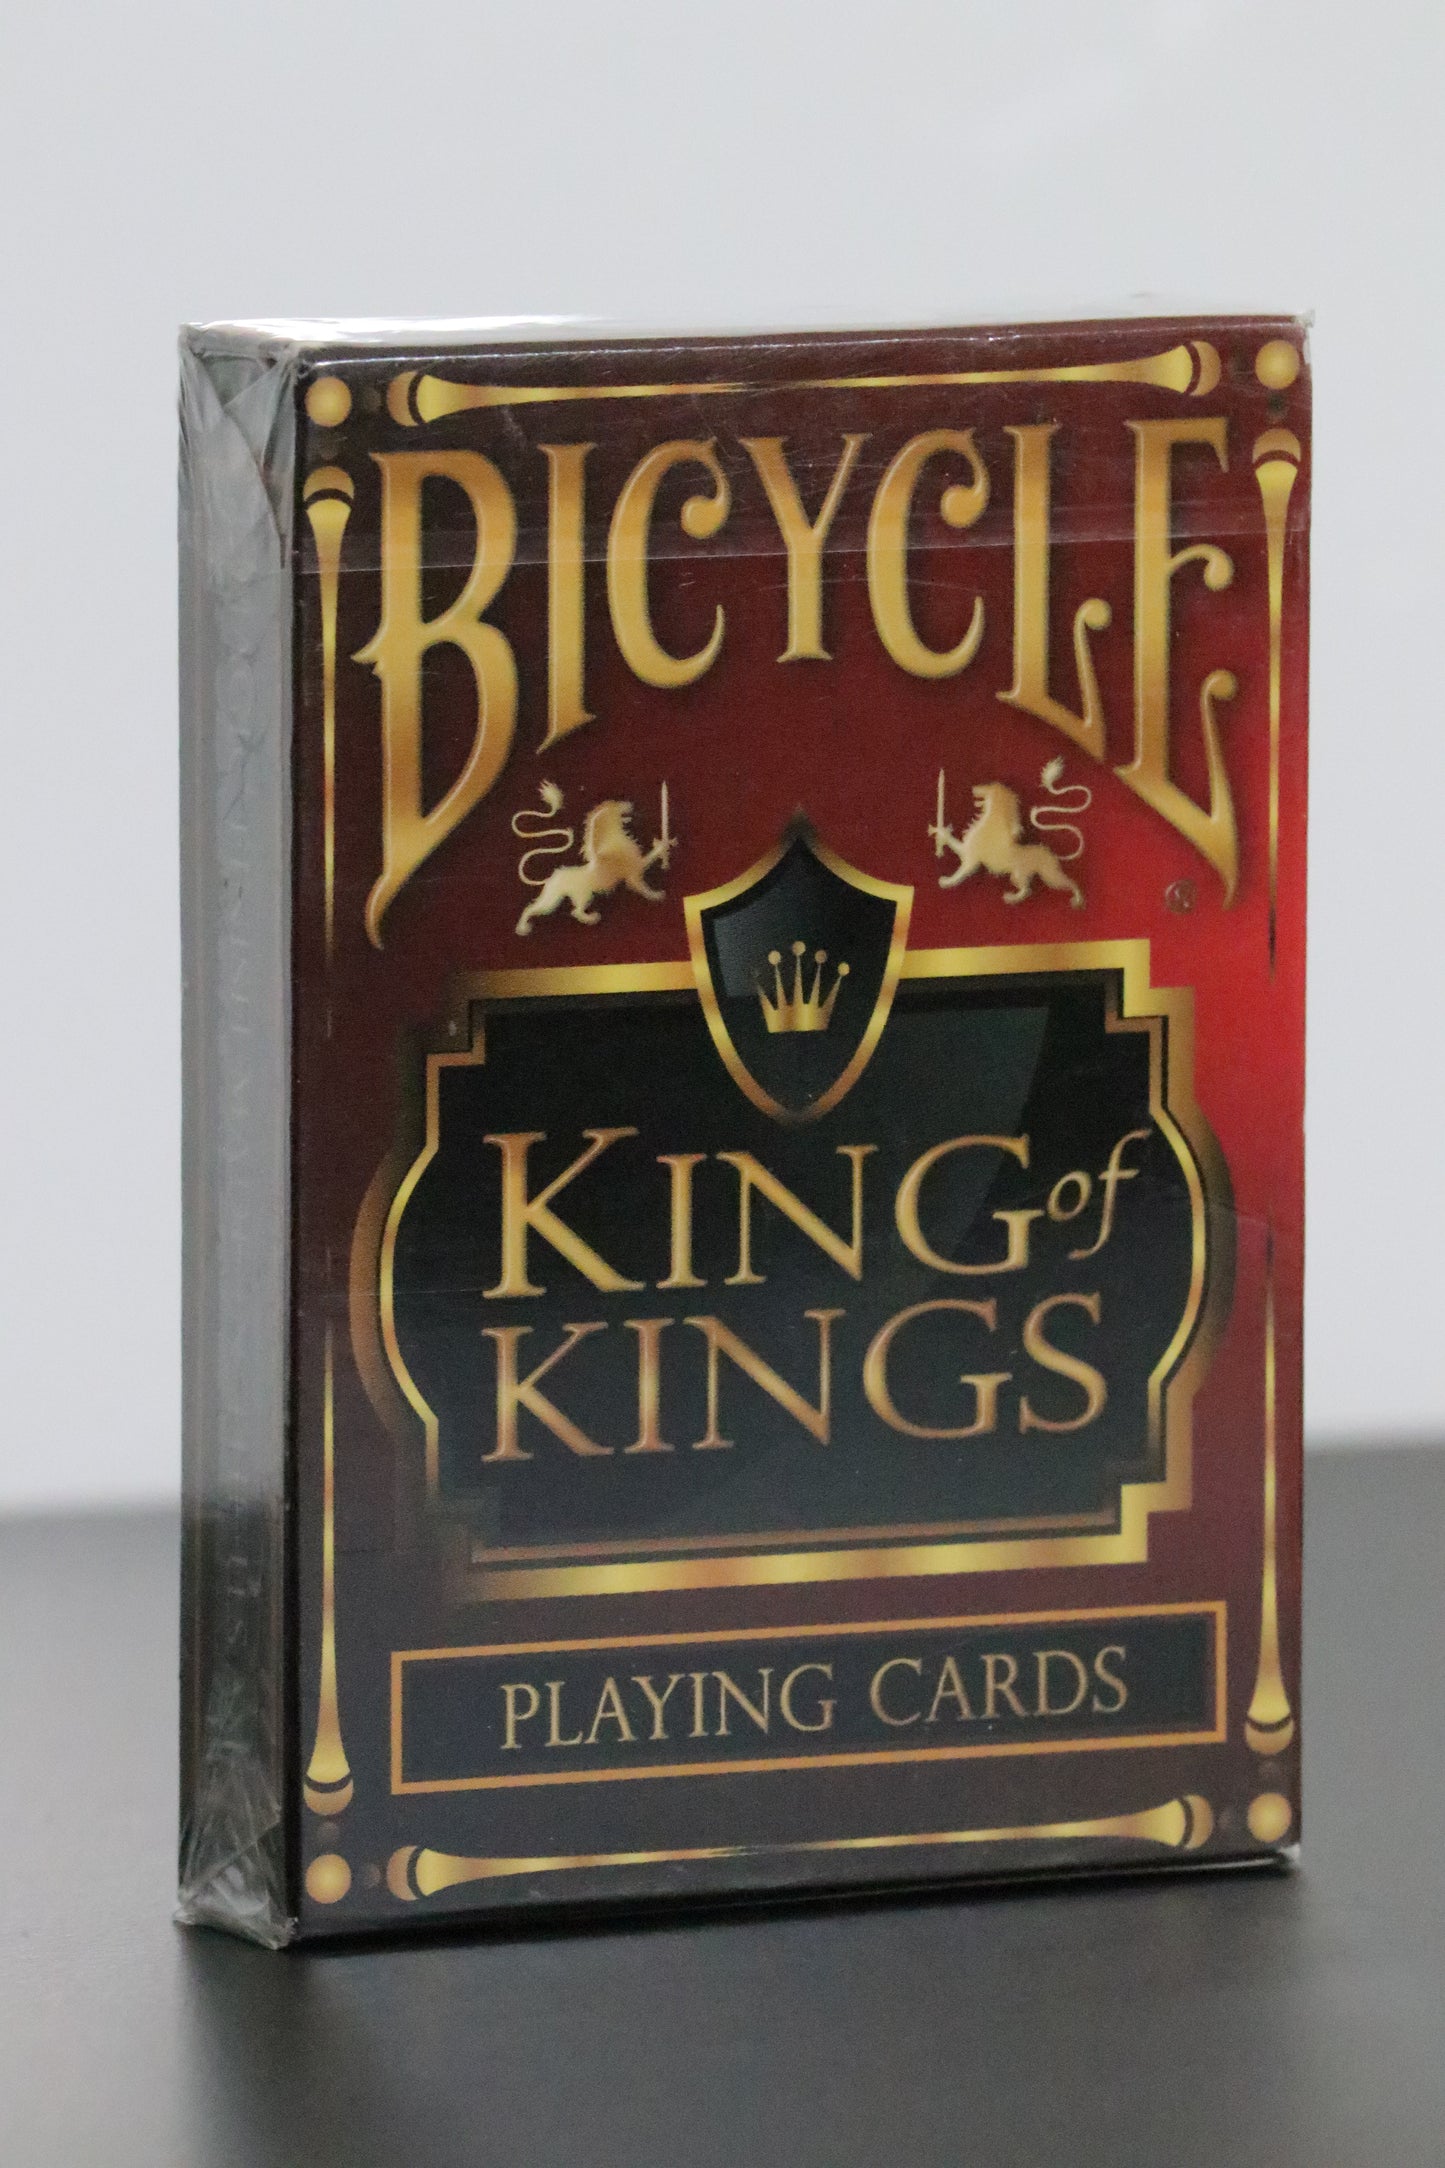 Bicycle King of Kings